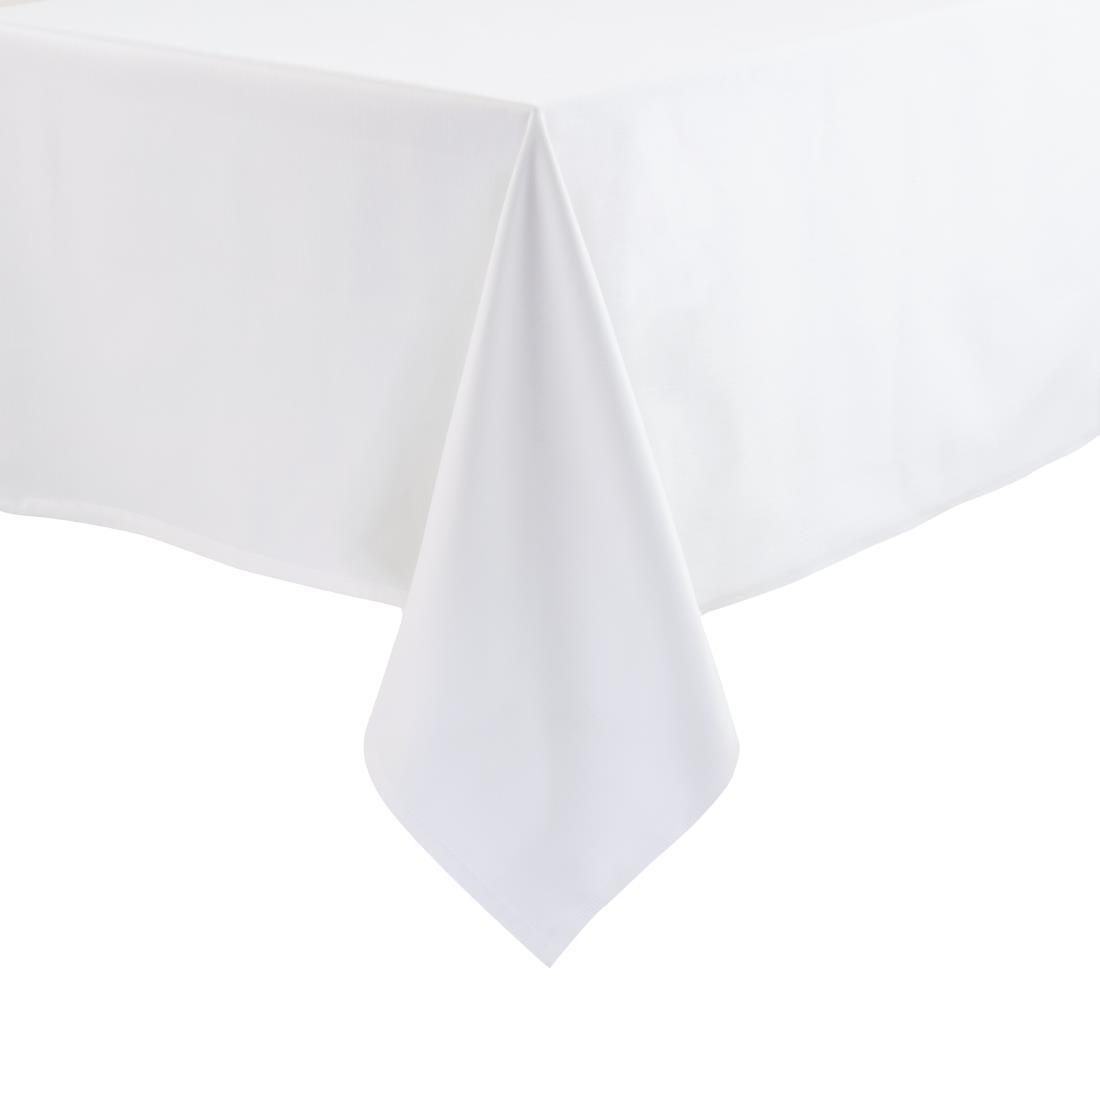 Mitre Essentials Occasions Tablecloth White 1780 x 2750mm - GW435  - 1